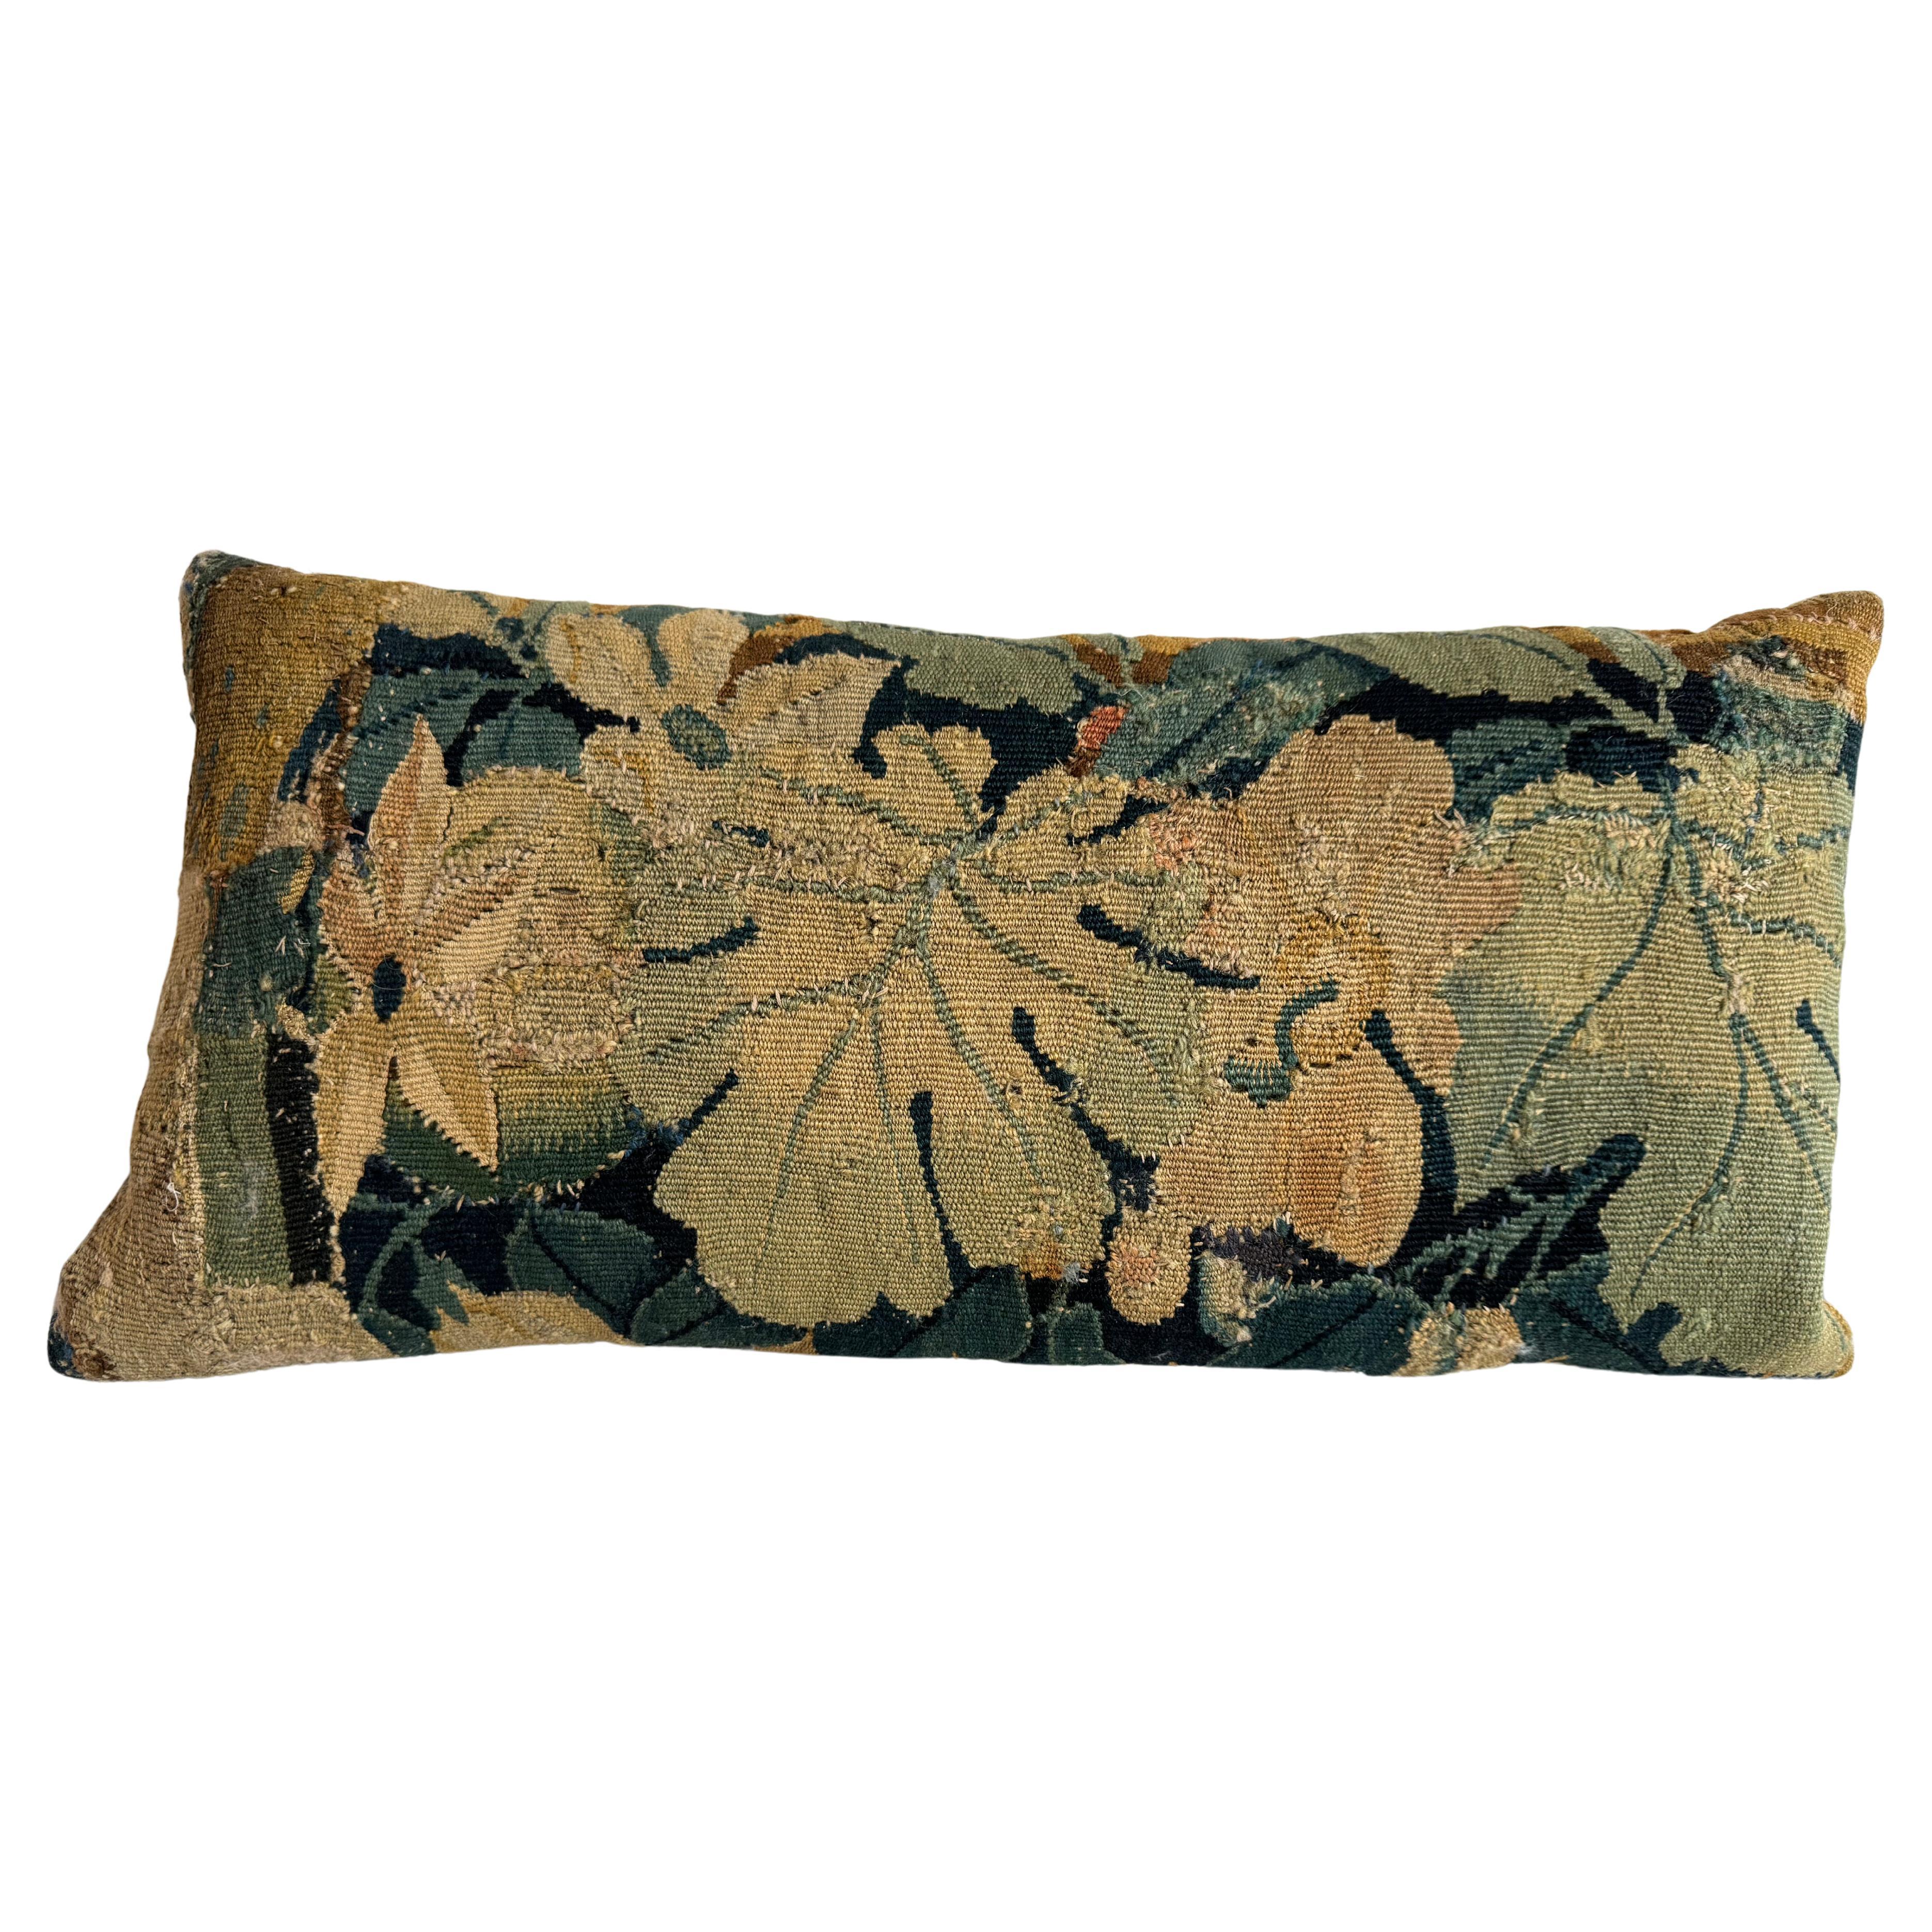 17th Century Flemish Pillow - 24" x 12"